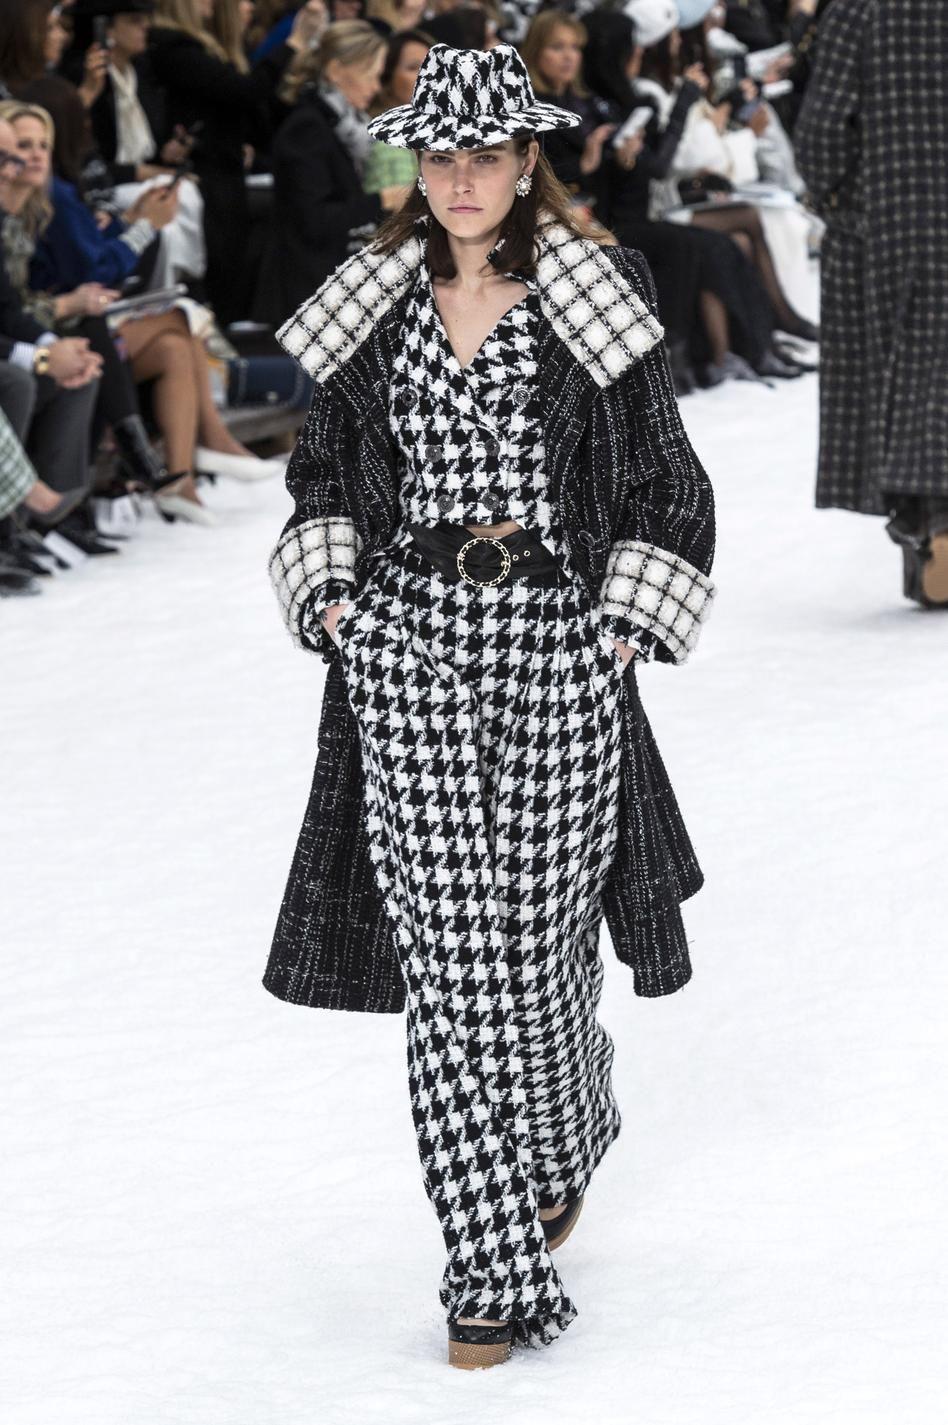 Parade-Chanel-Fall-Winter 2019-2020 ready-to-wear